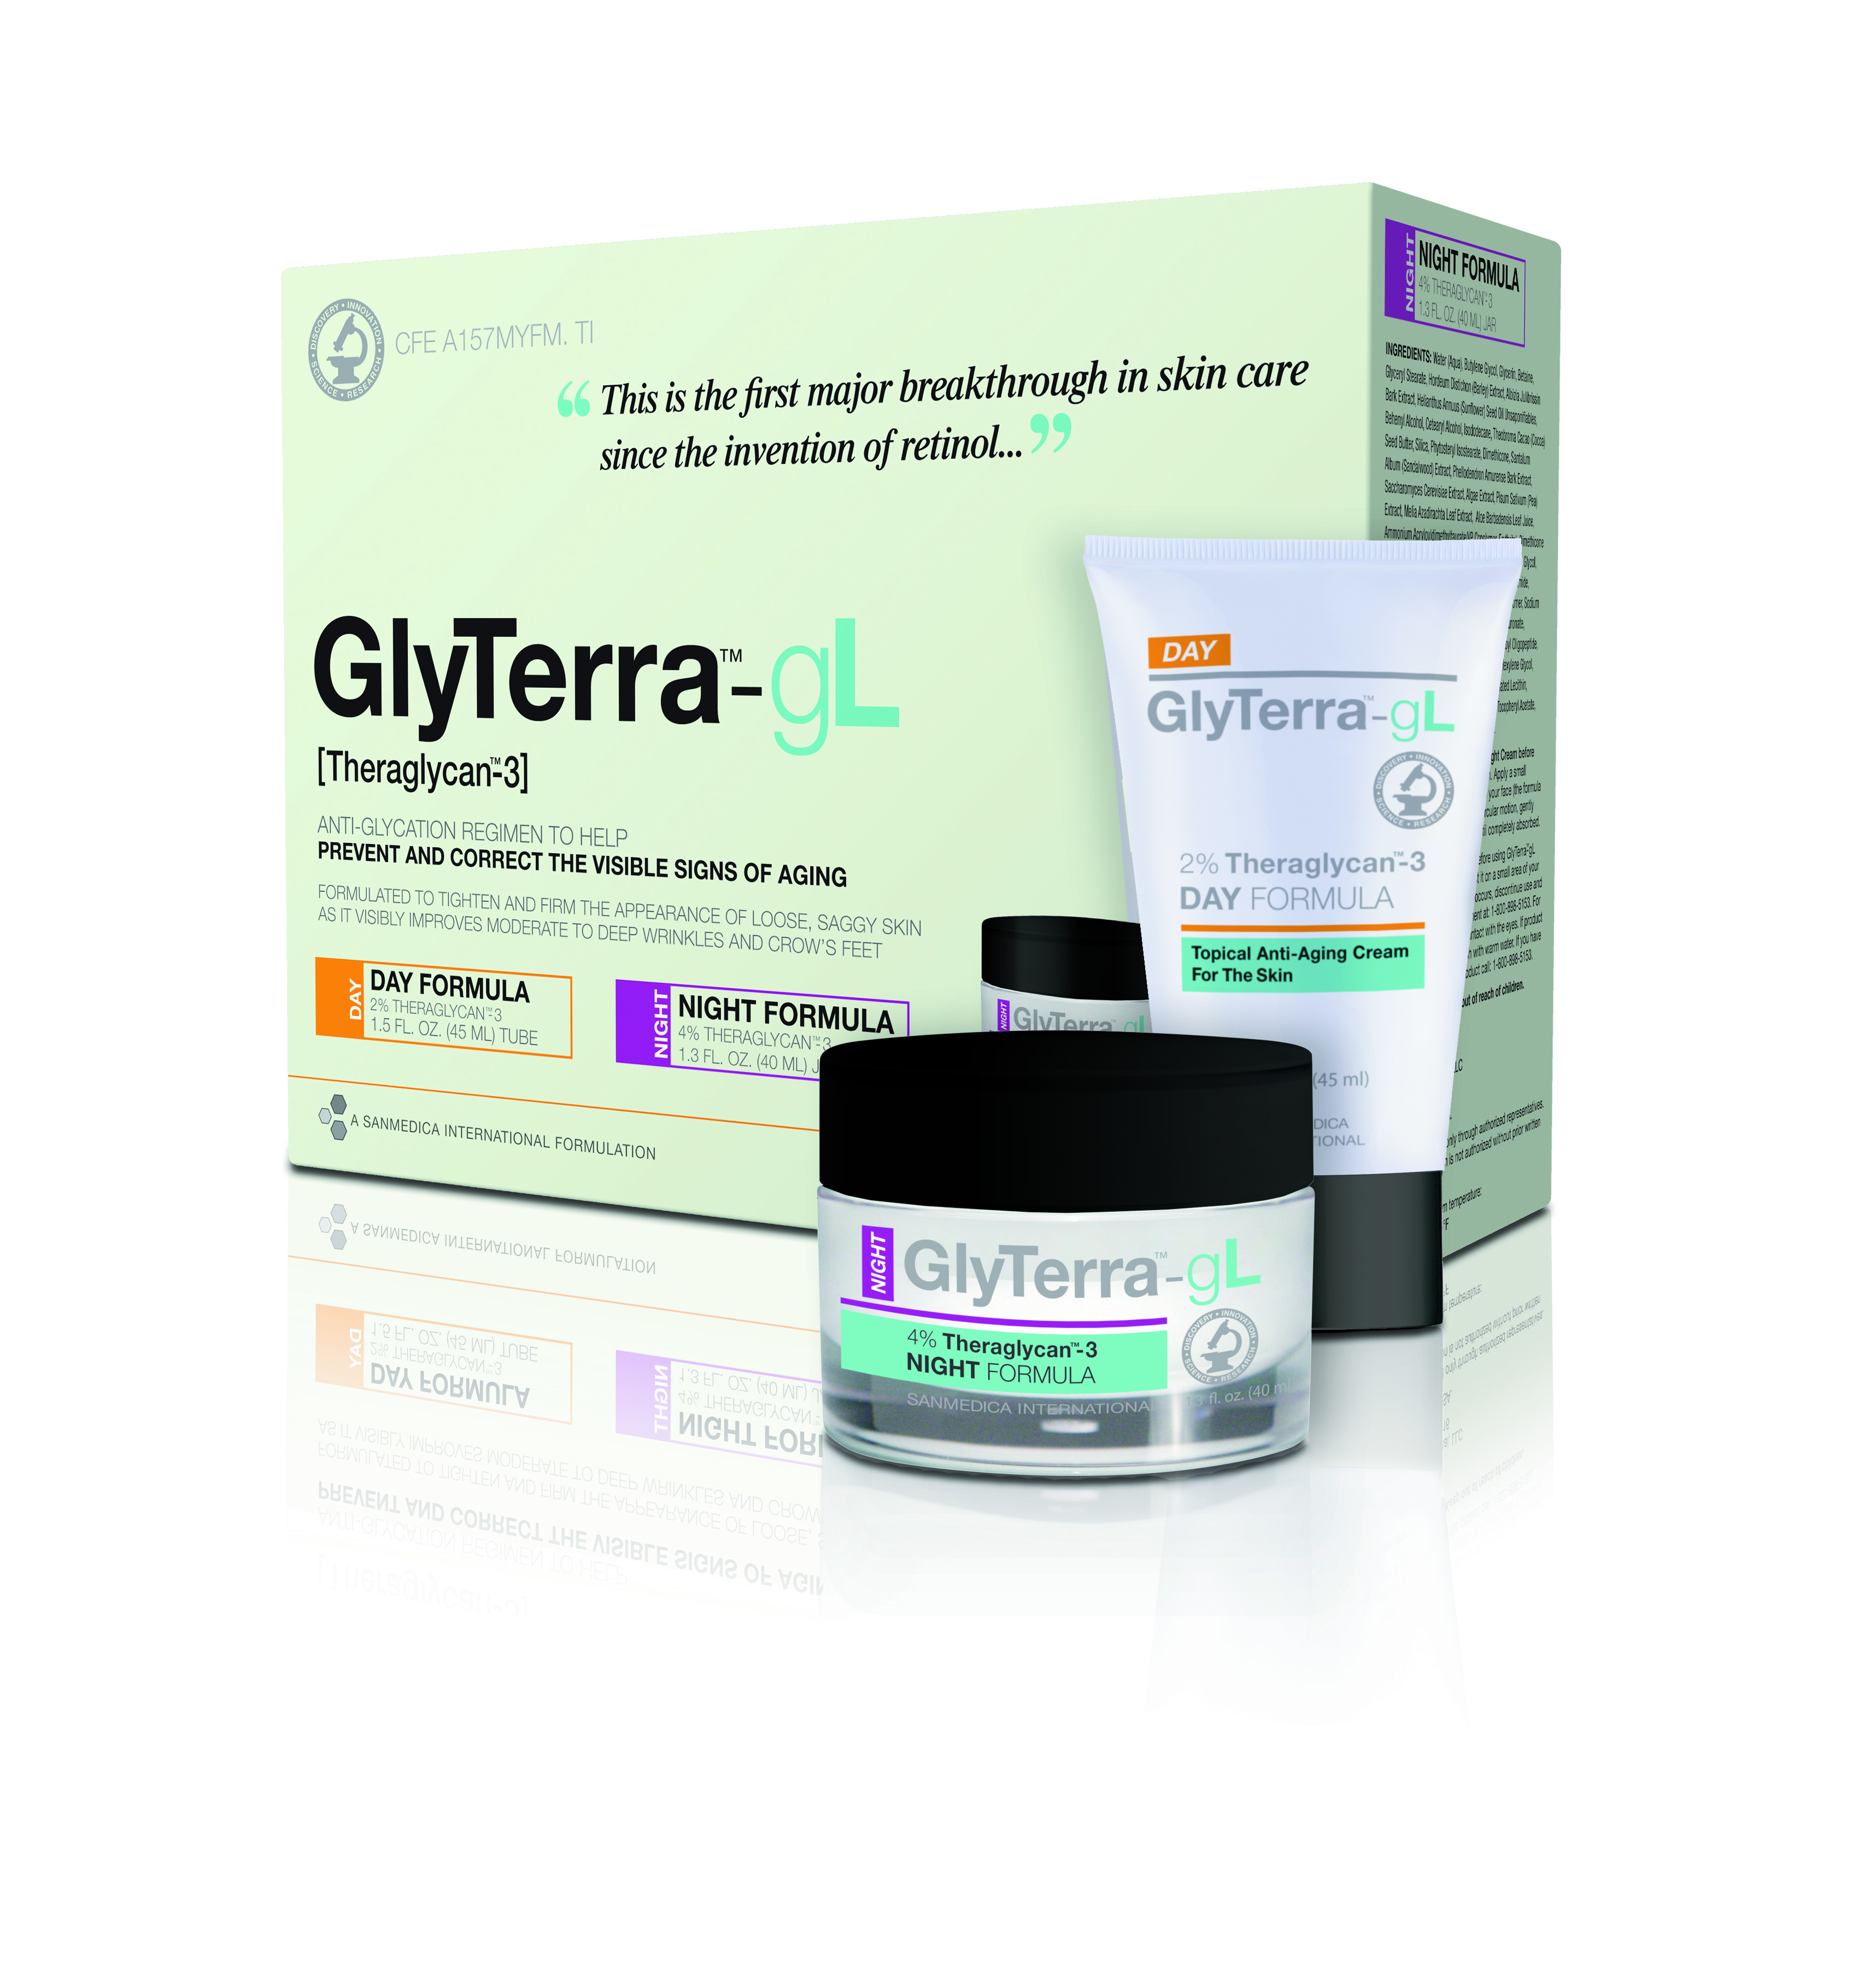 Glyterra-gL, a New Skin Tightening Breakthrough!